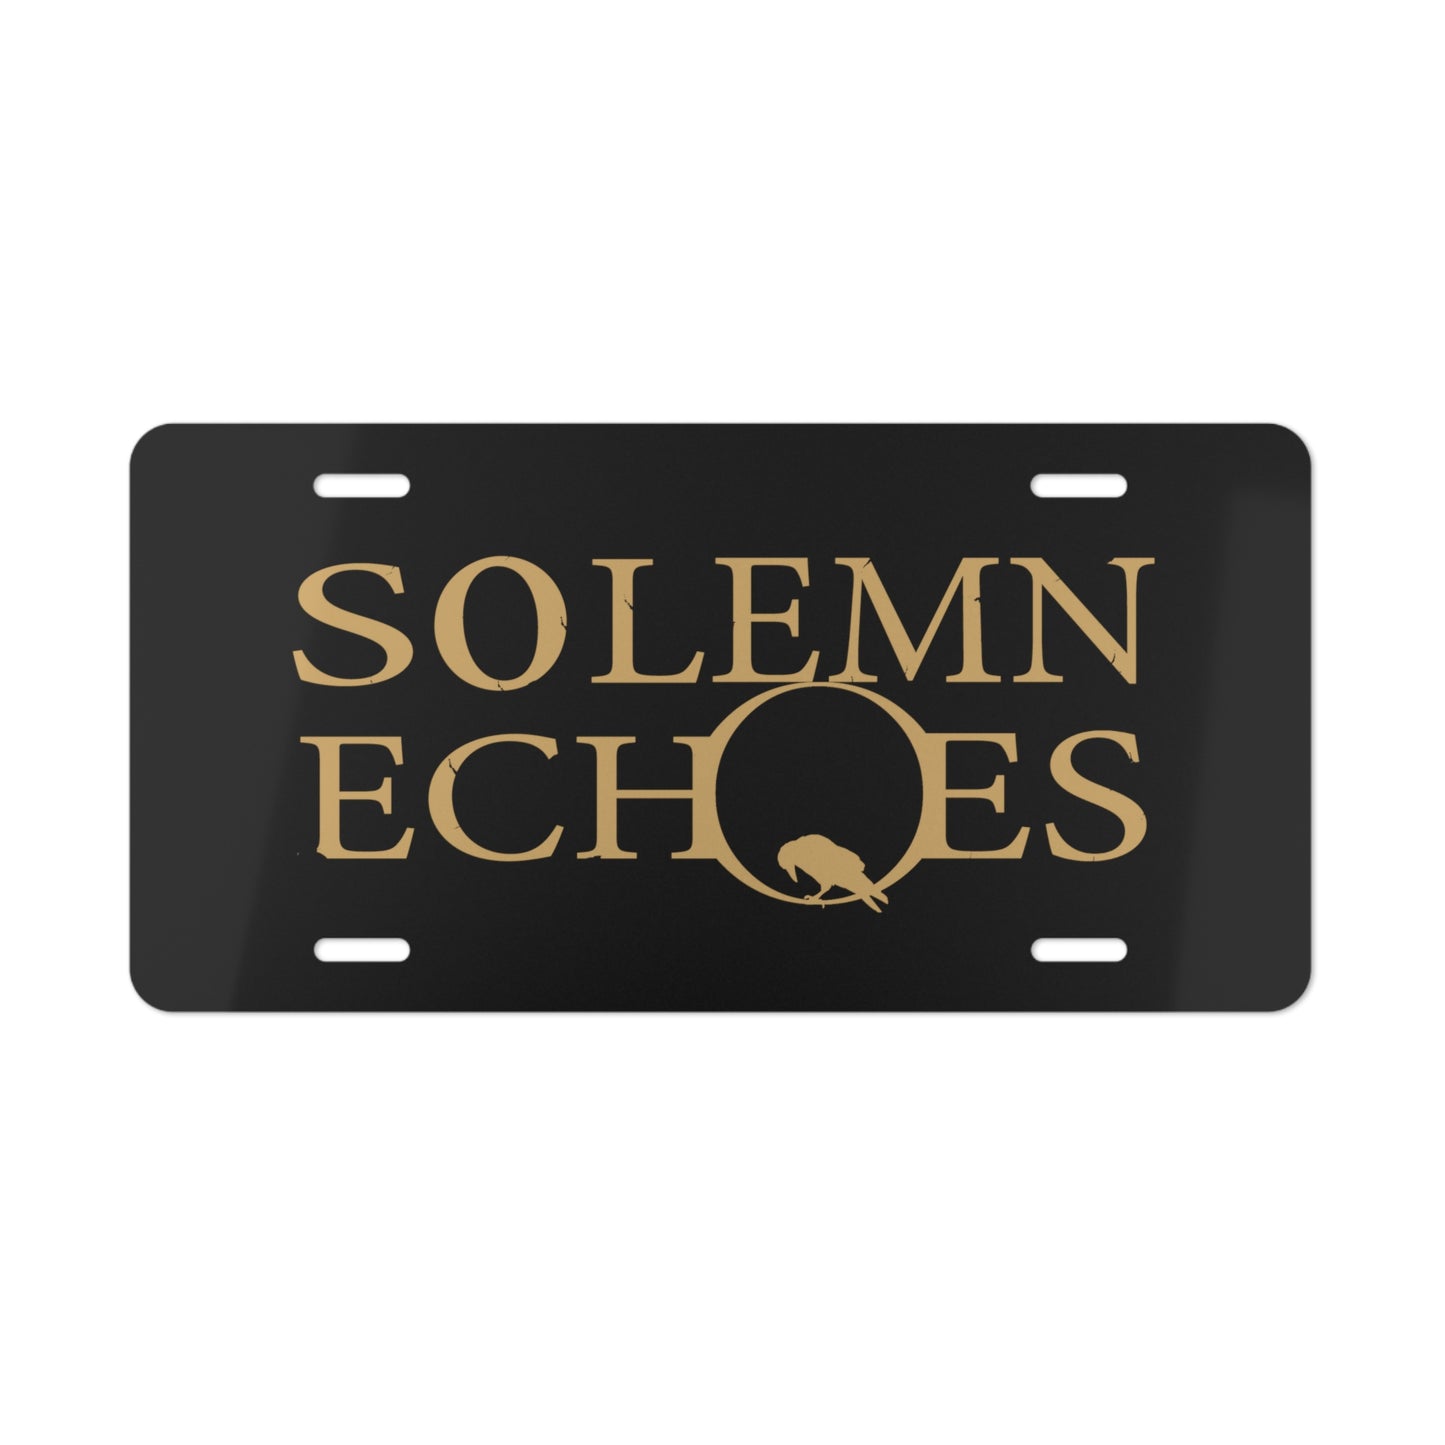 Solemn Echoes - Vanity Plate